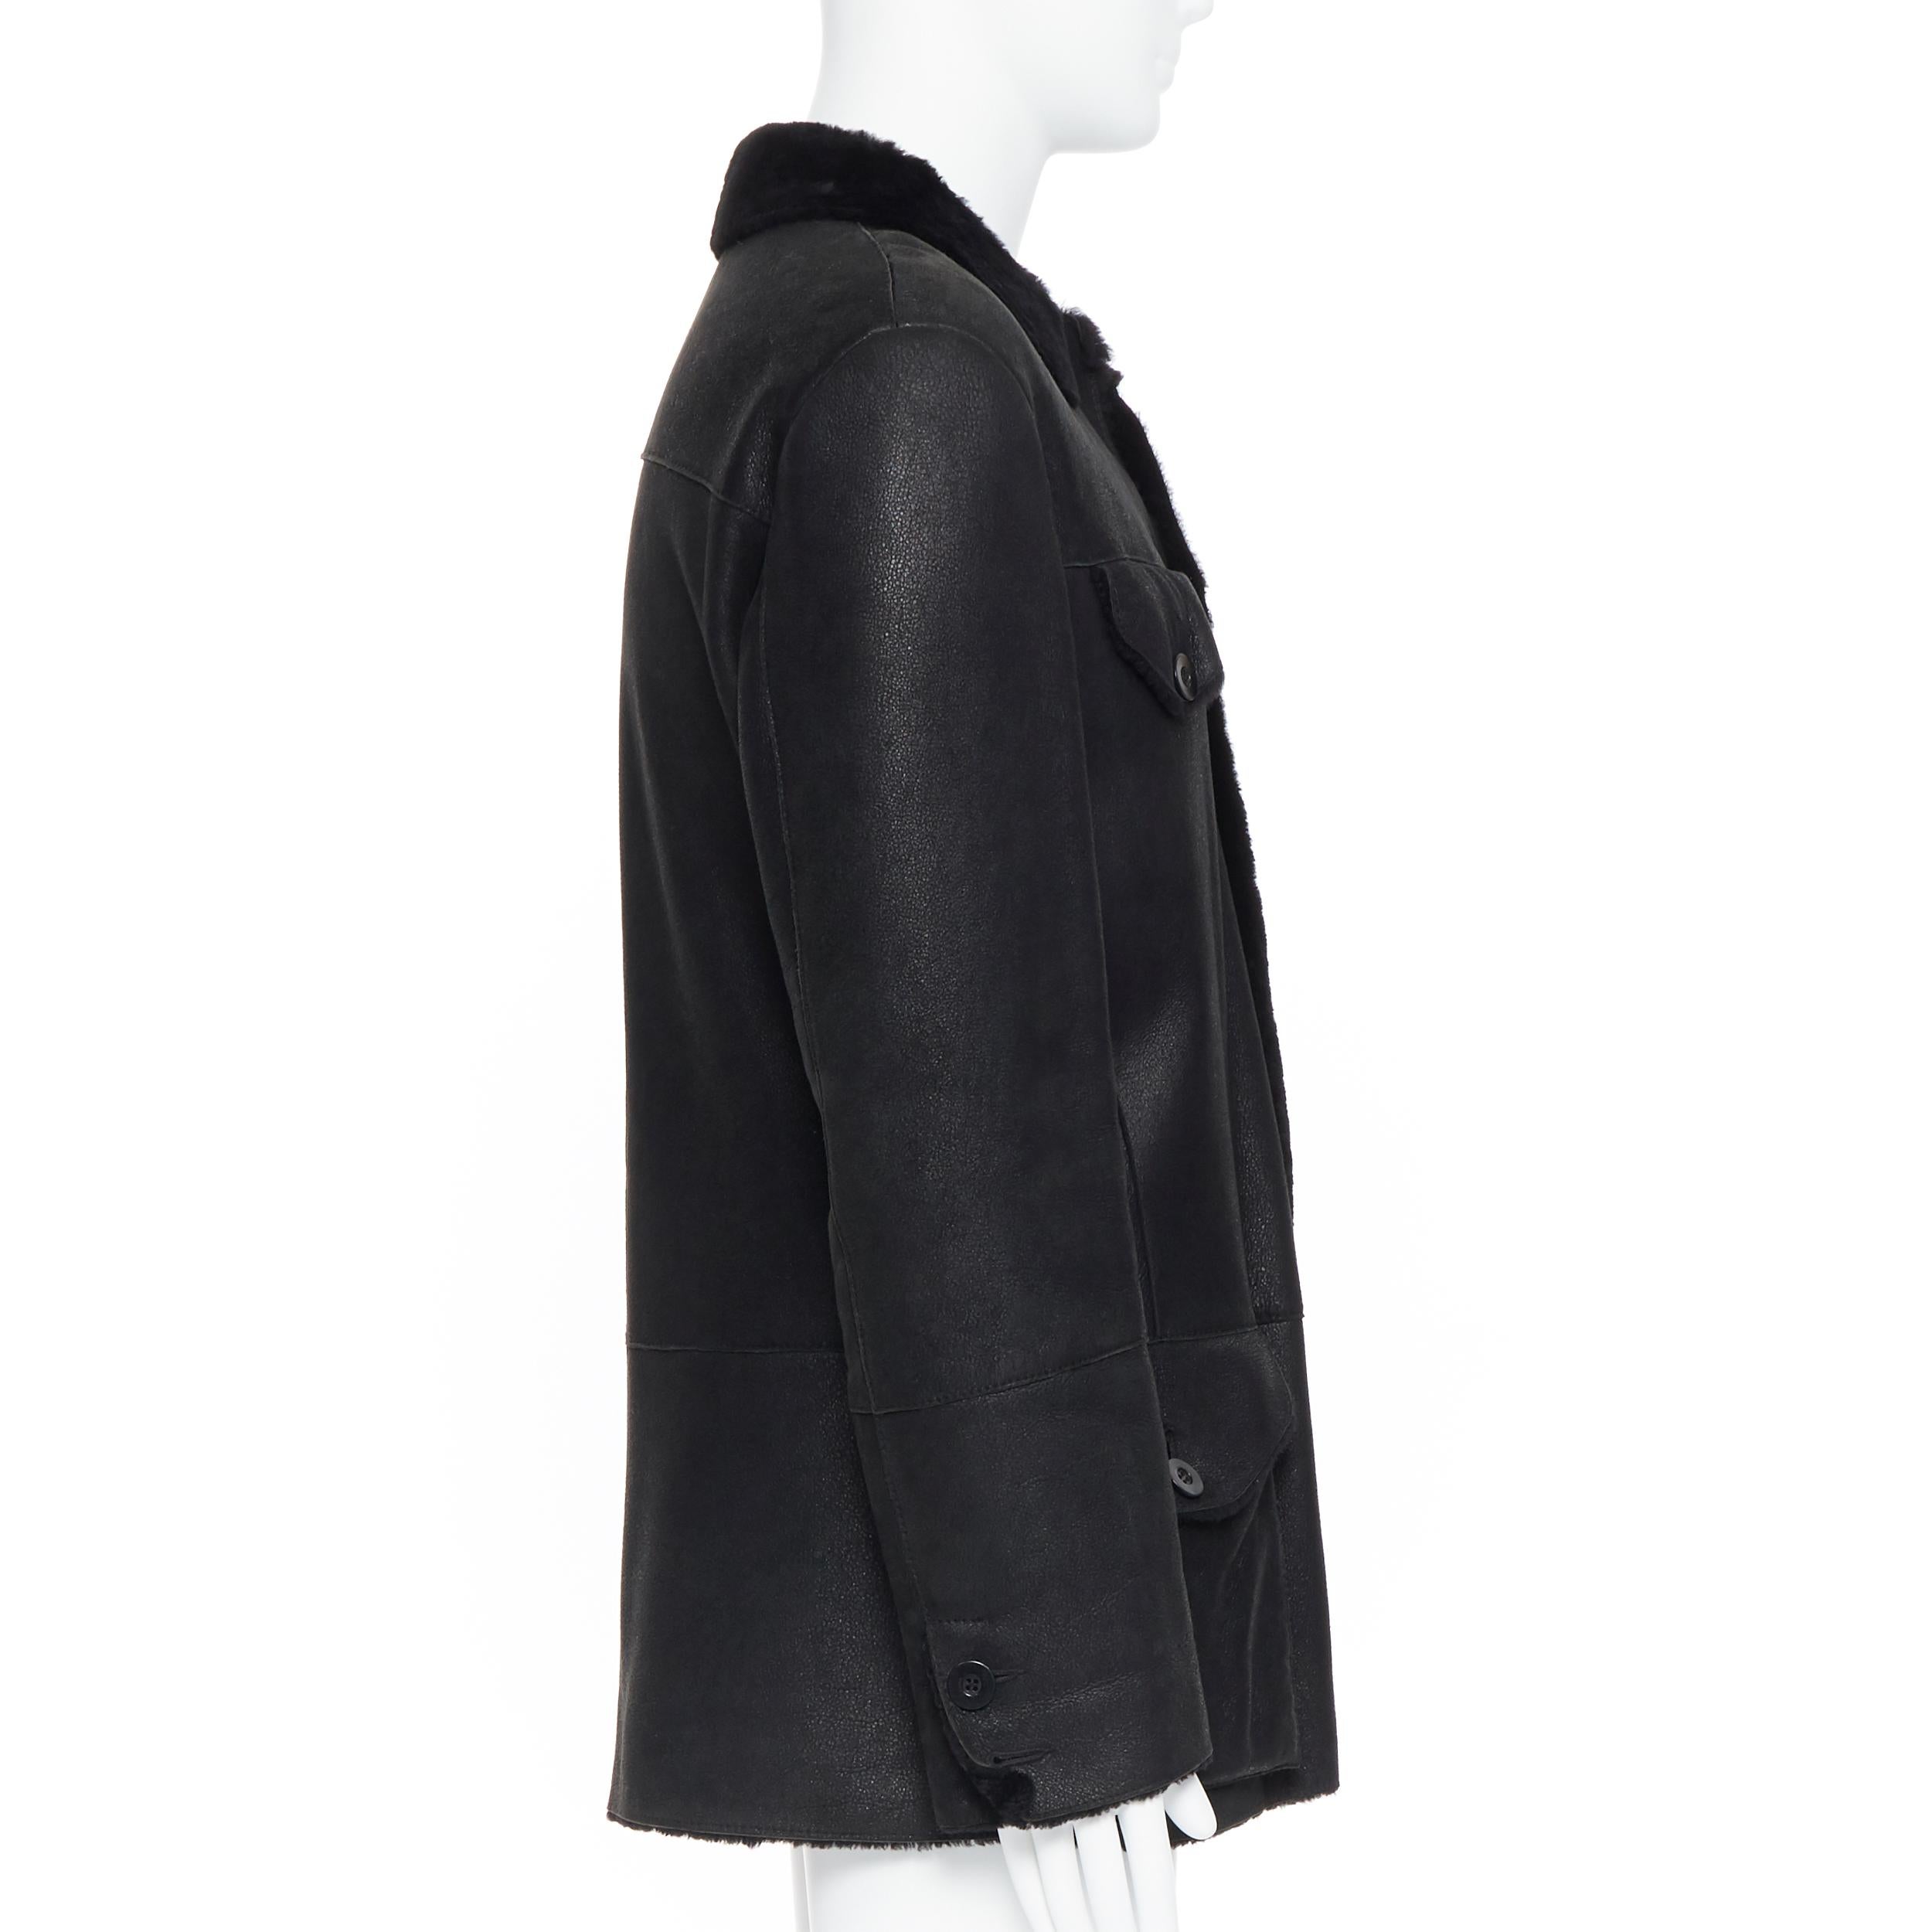 Black EMPORIO ARMANI black leather shearling lined 4-pocket aviator winter coat EU50 L